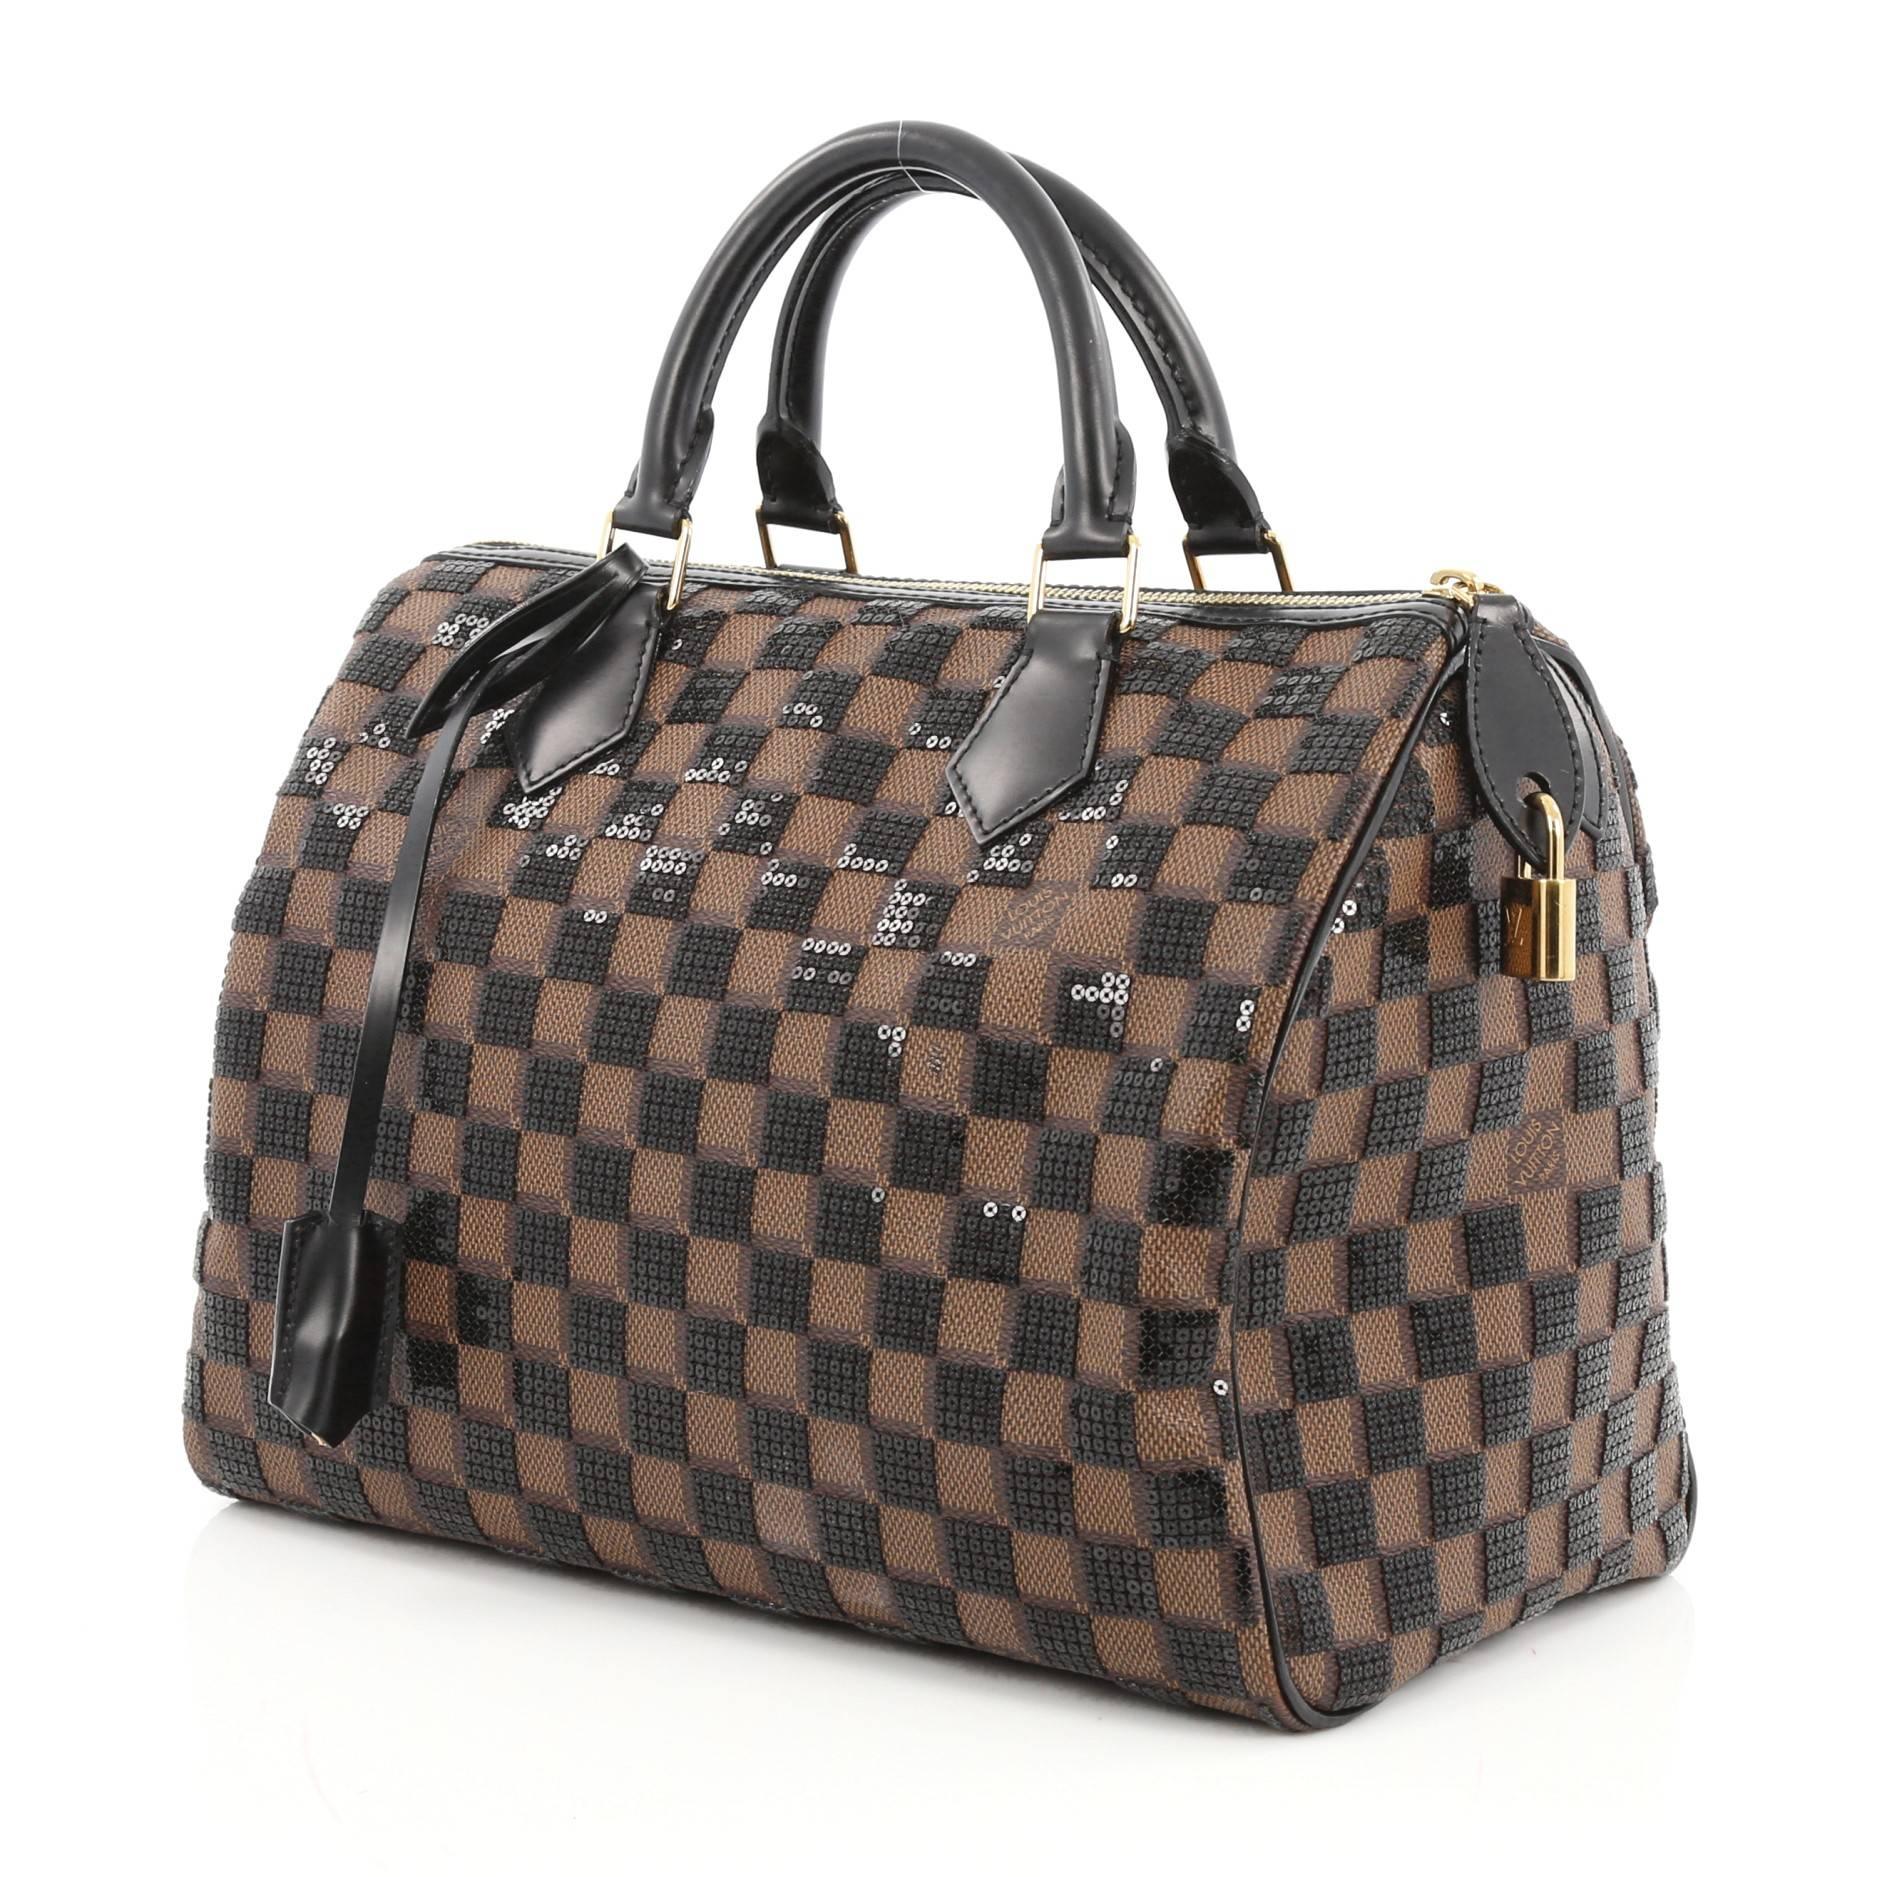 Women's Louis Vuitton Speedy Handbag Damier Paillettes 30